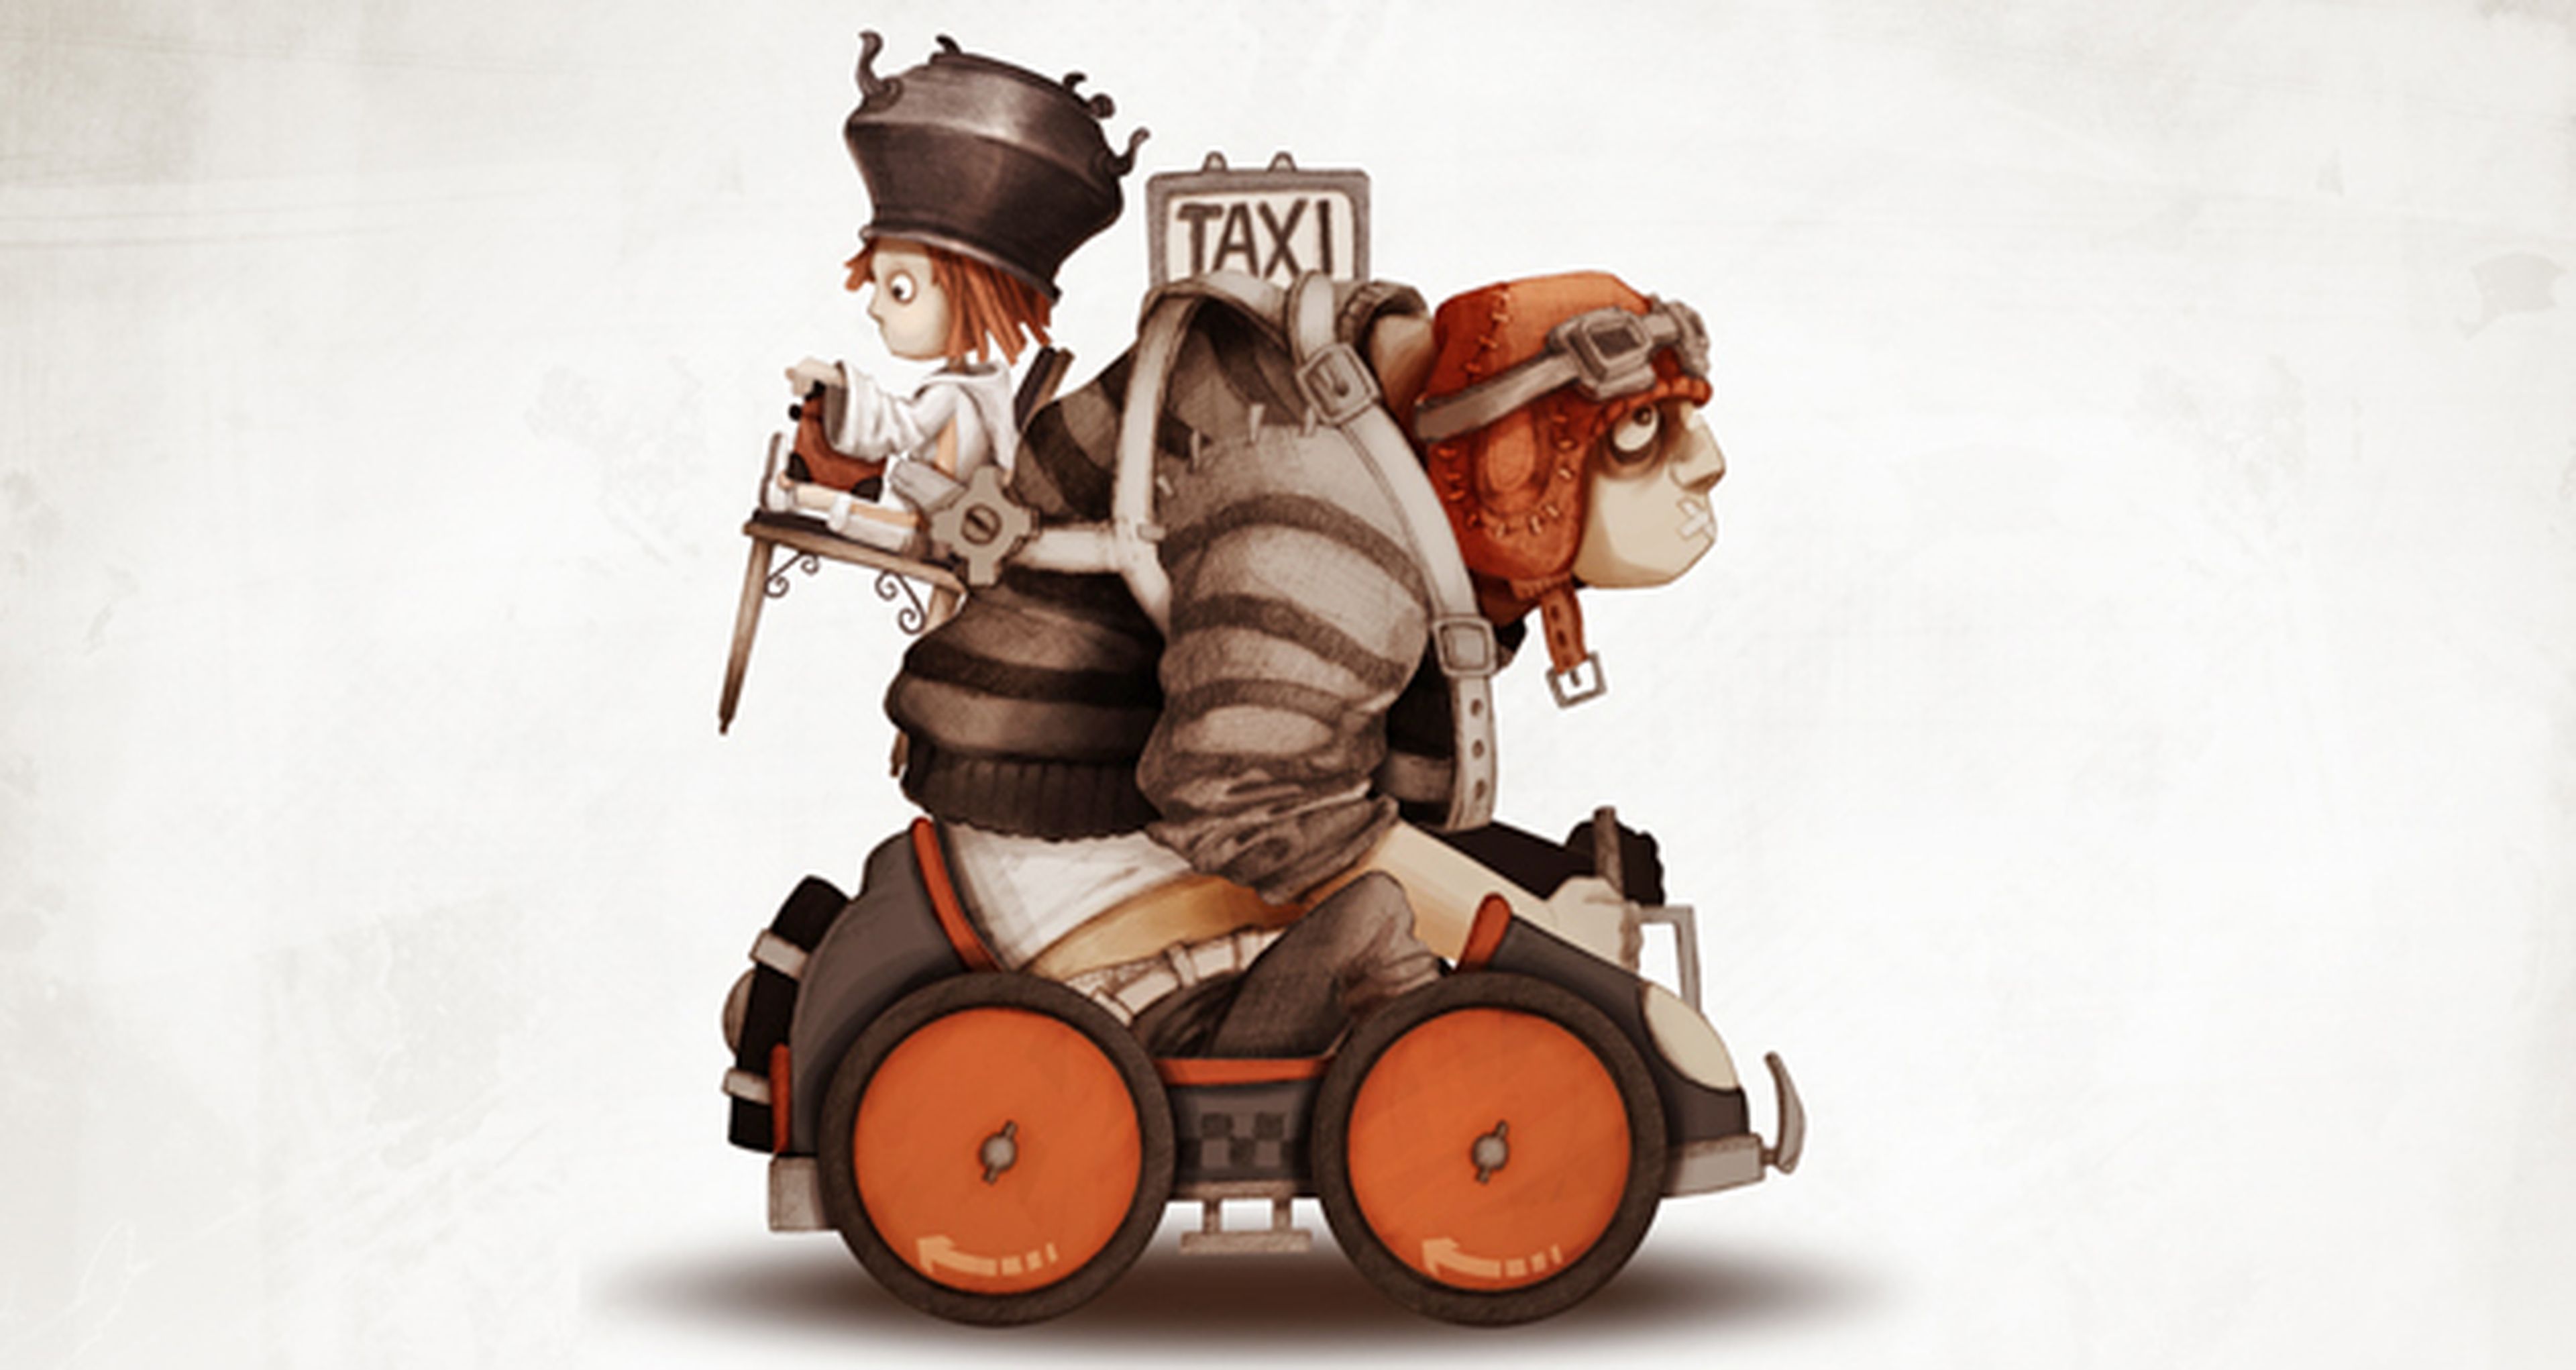 Taxi Journey, primer juego francés en Kickstarter